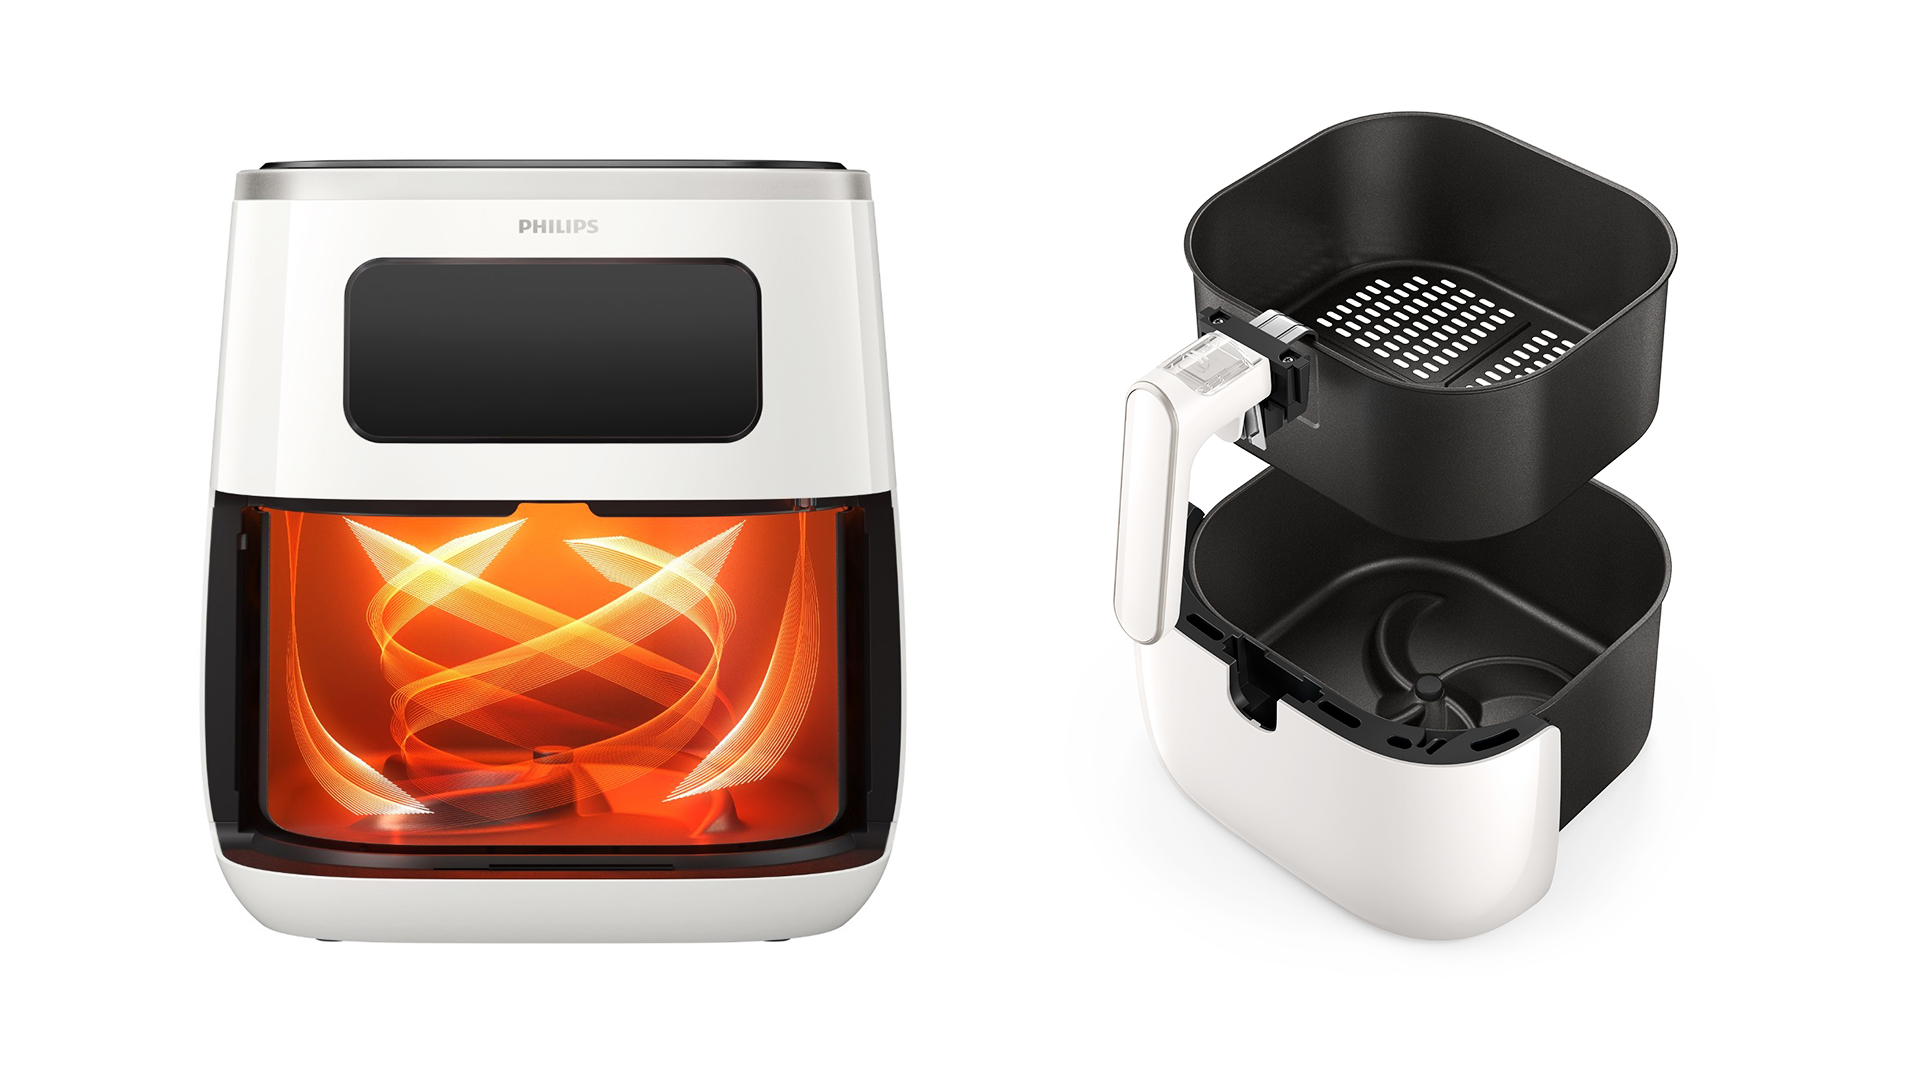 Digital Visible-cooking Air Fryer